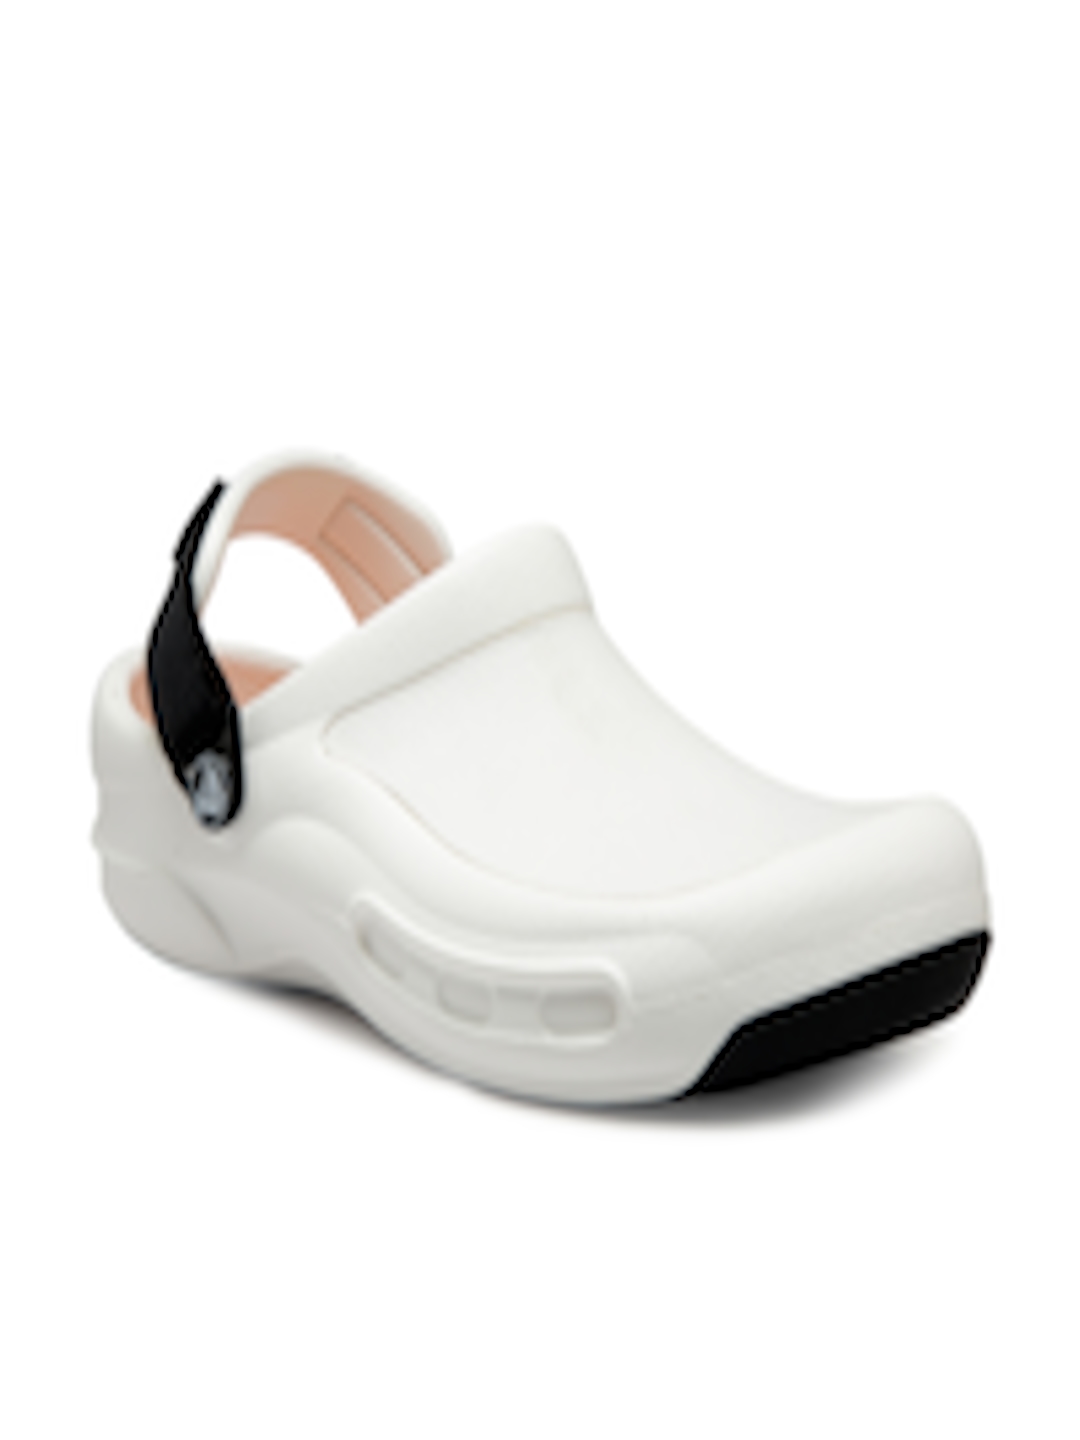 Buy Crocs Men White Clogs - Sandals for Men 7178361 | Myntra